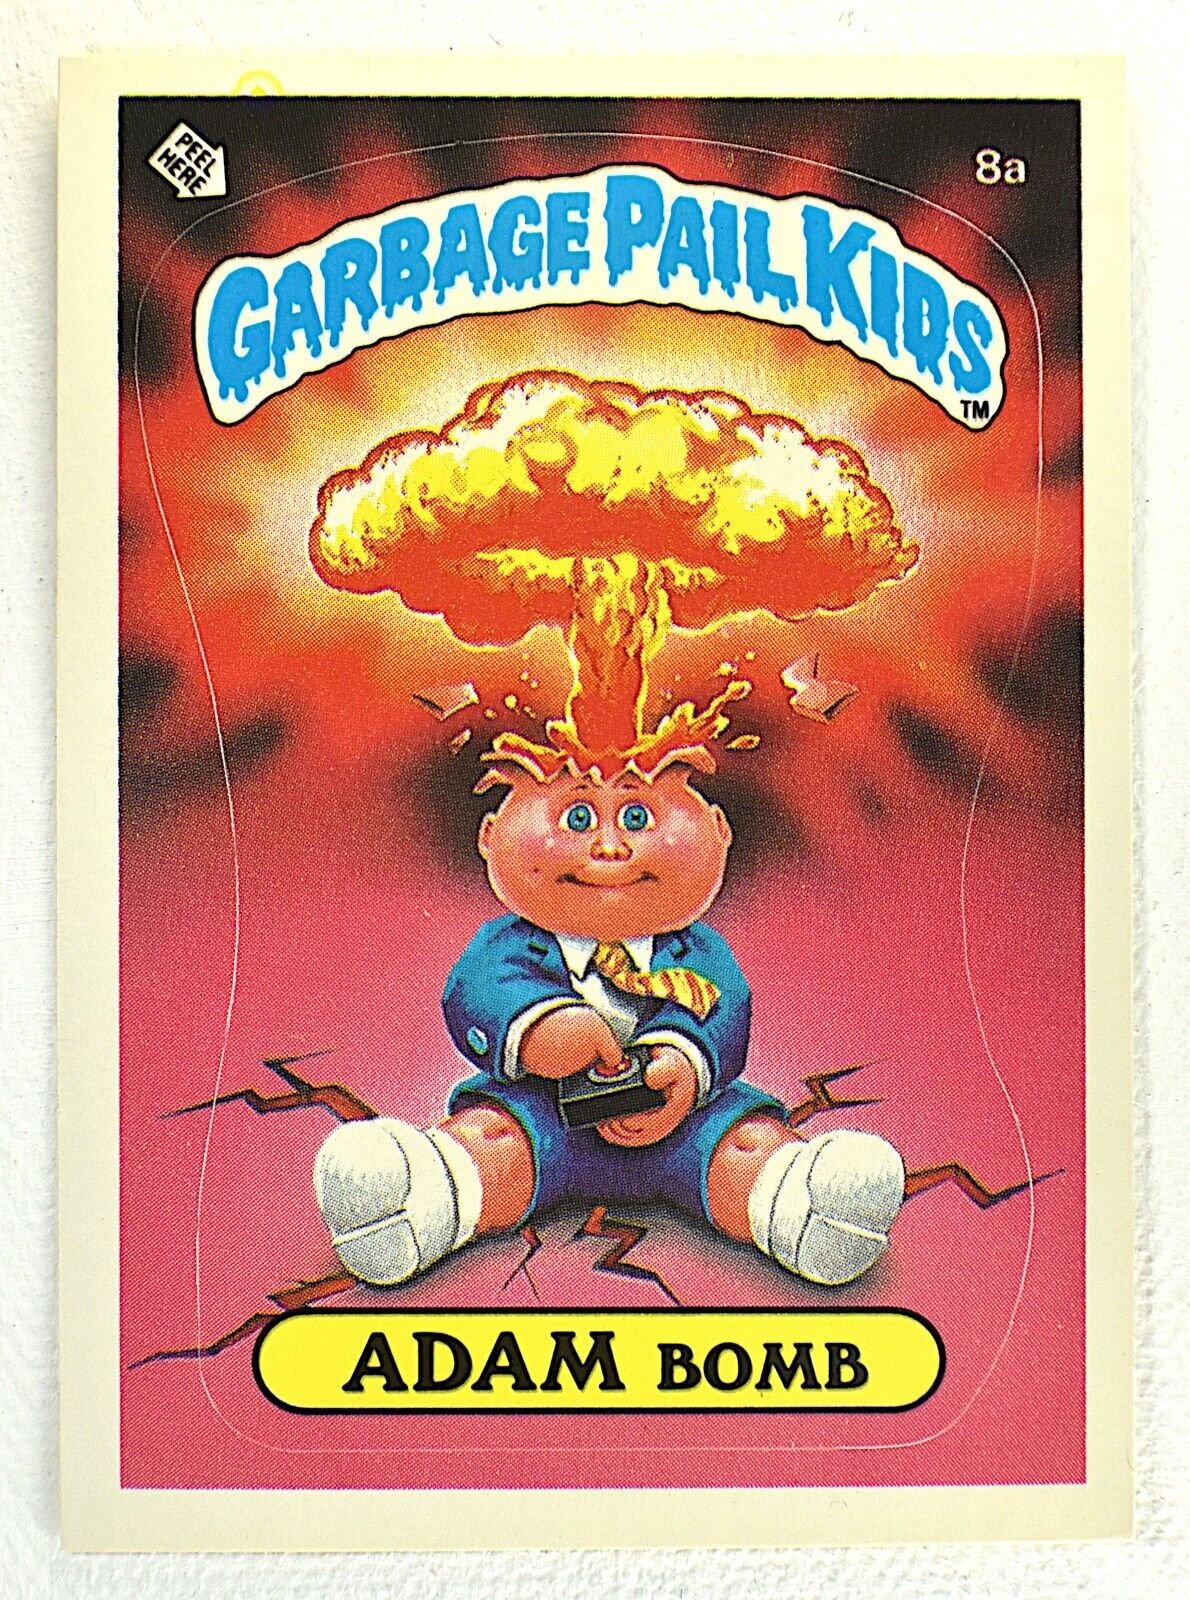 GARBAGE PAIL KIDS ADAM BOMB ERROR CARD 8a SERIES 1 GPK OS1 NM VERY RARE, 1985